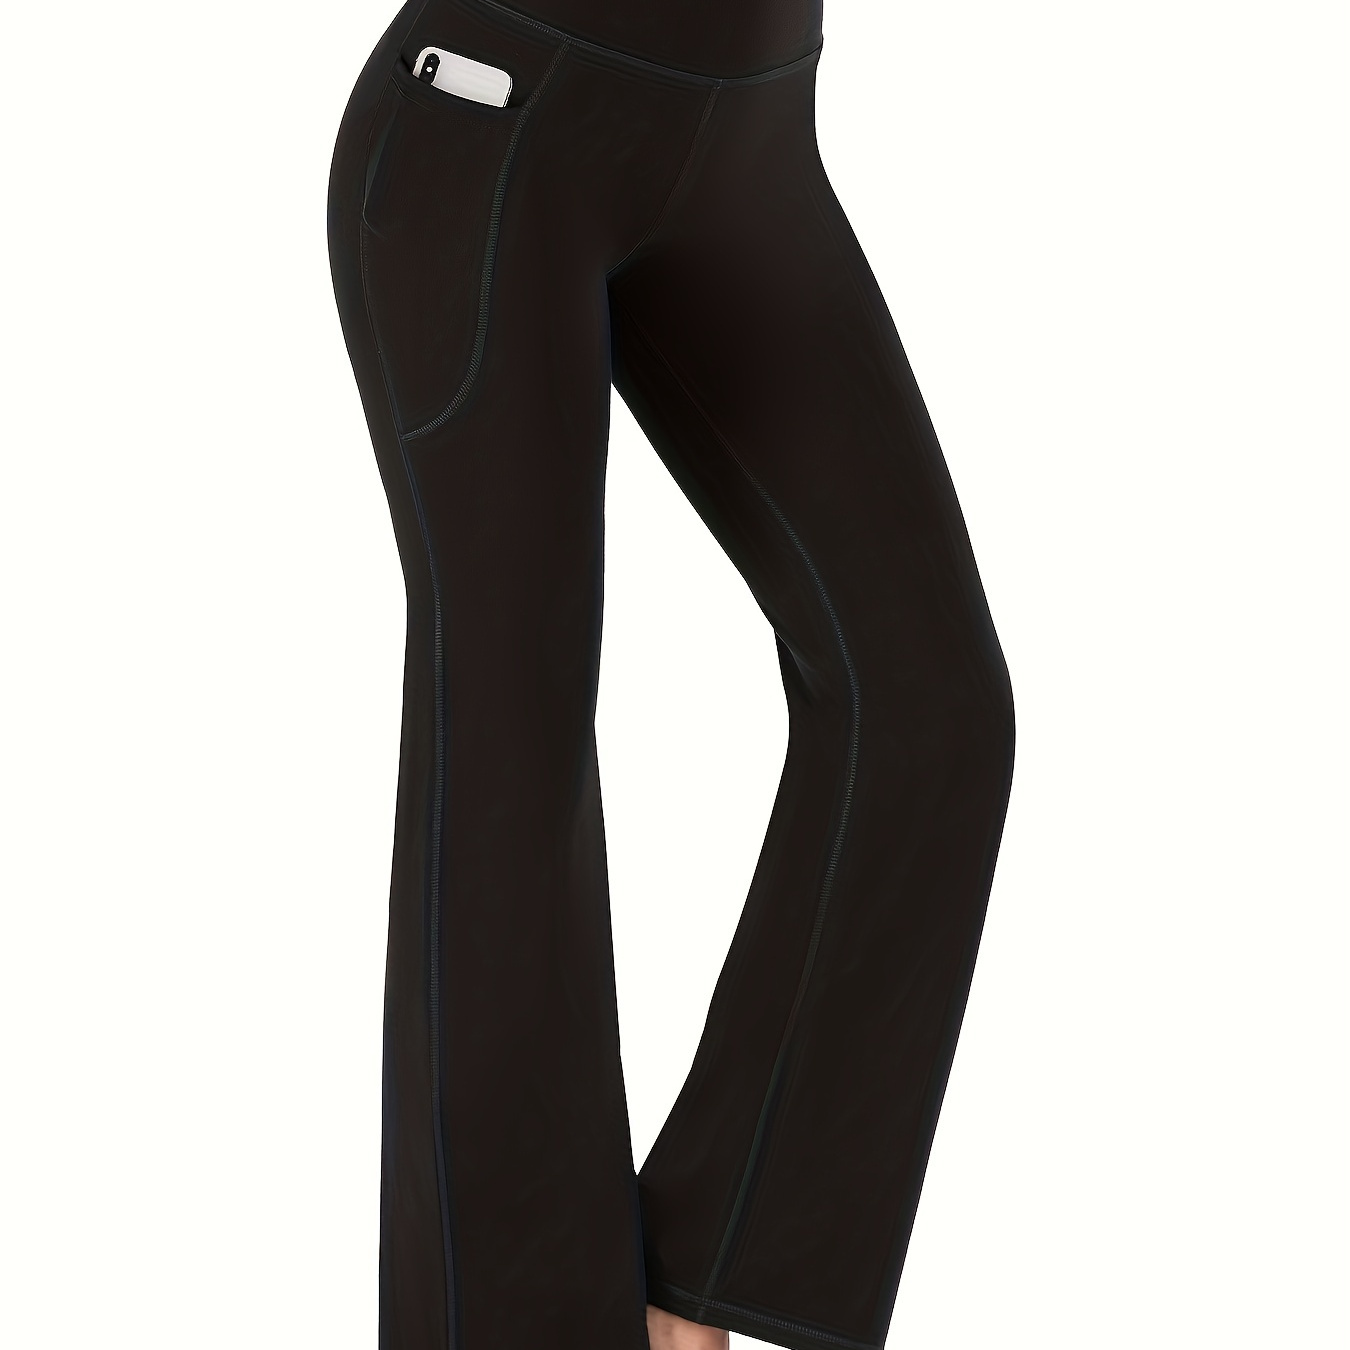 TrendVibe365 Flare Leggings with Pockets for Women Yoga Pants